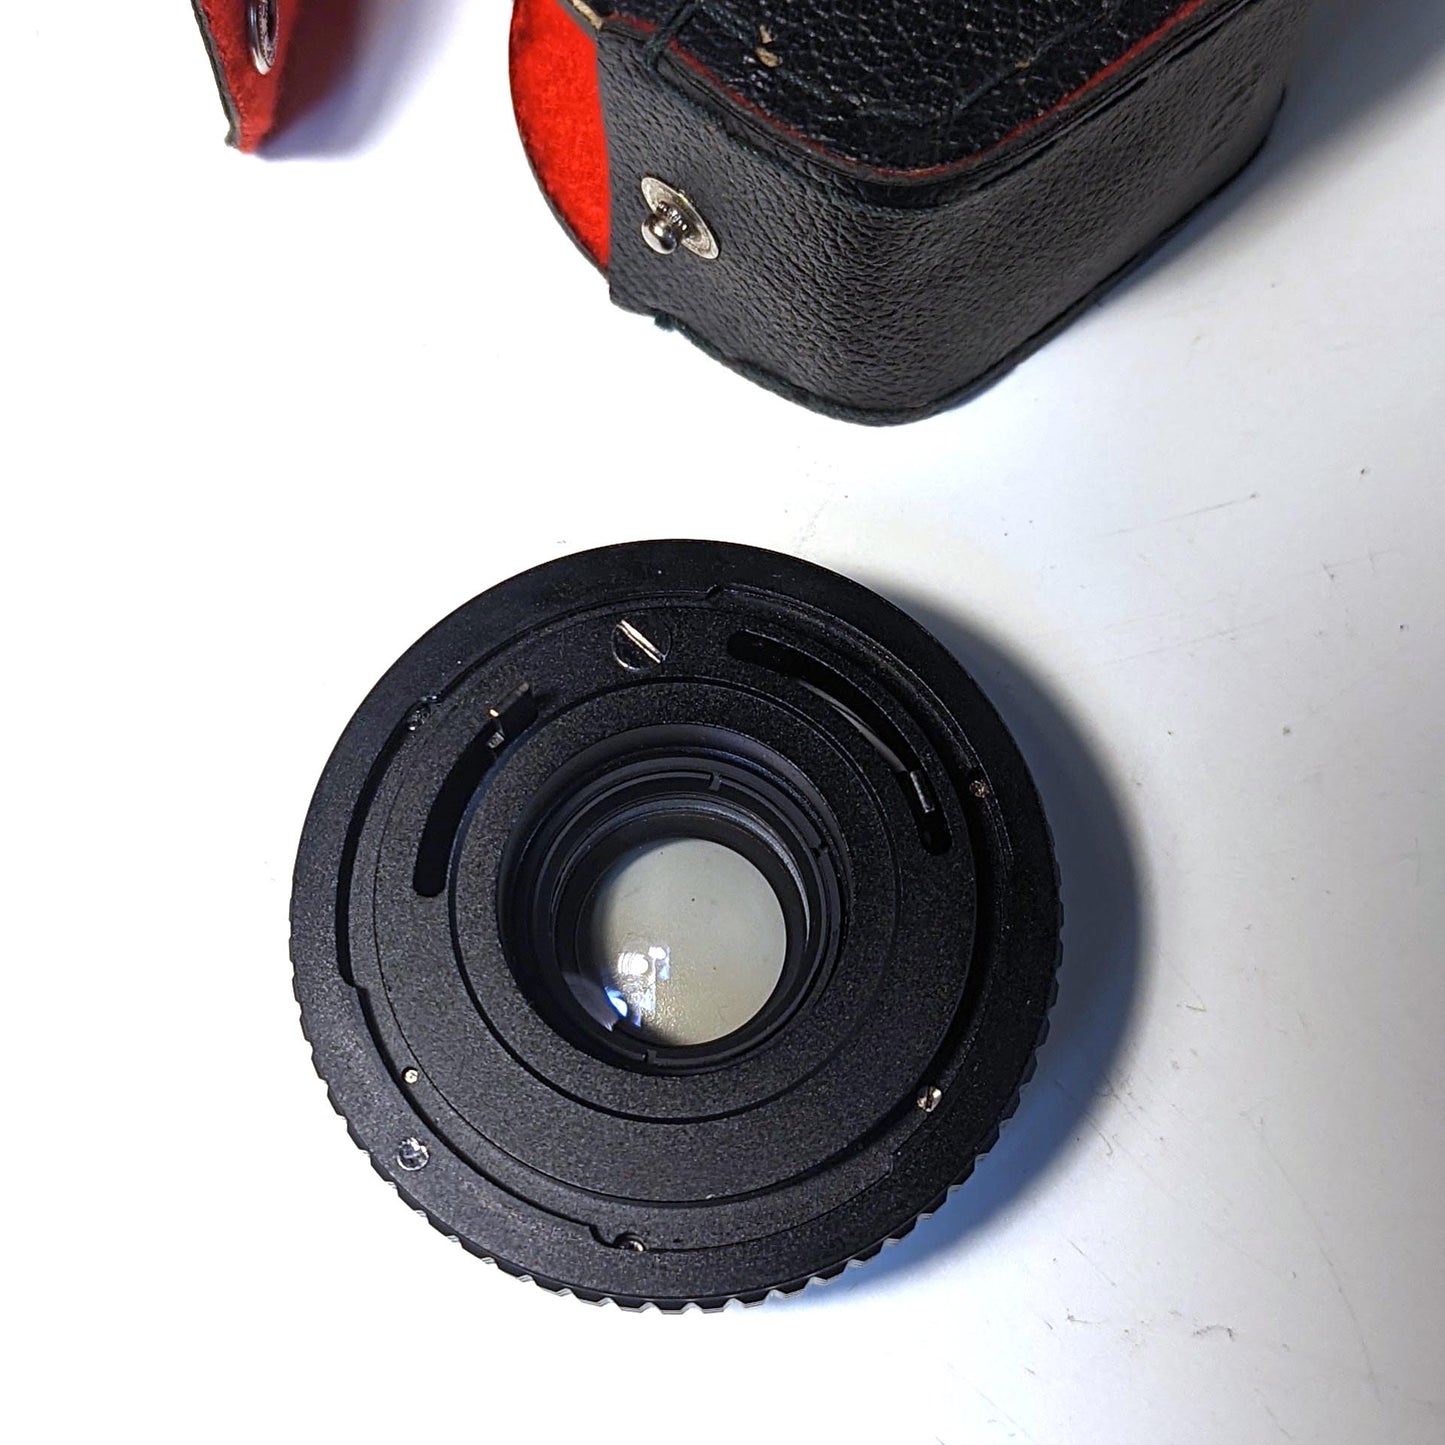 Vintage DEJUR AUTO 2X Teleconverter (CA) Lens Made in JAPAN